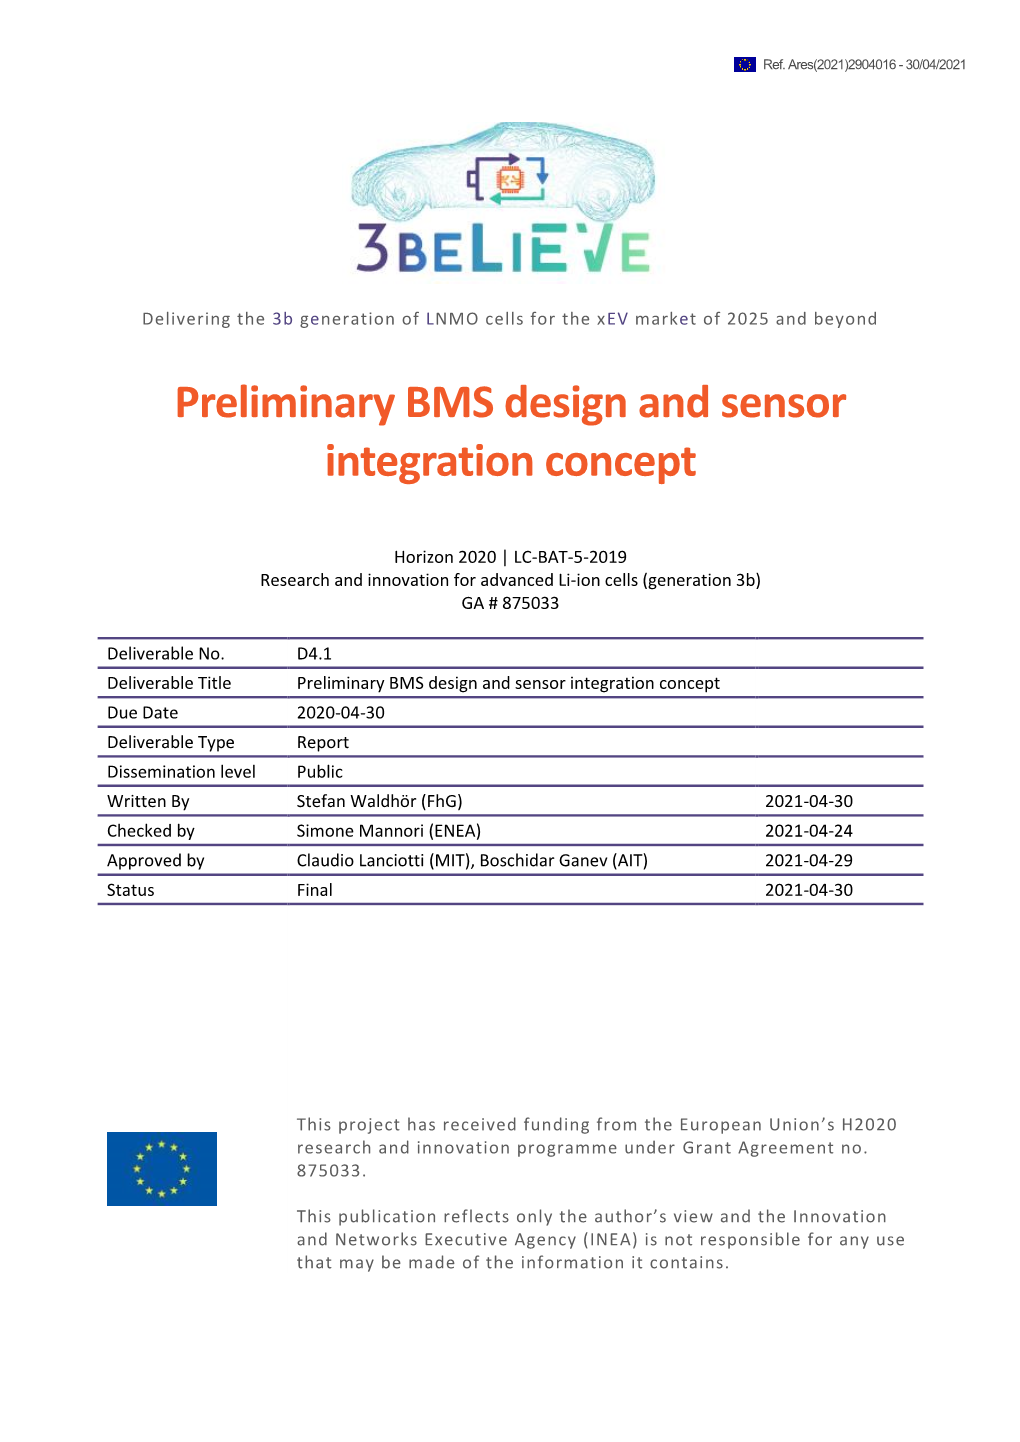 D4.1 Preliminary BMS Design and Sensor Integration Concept